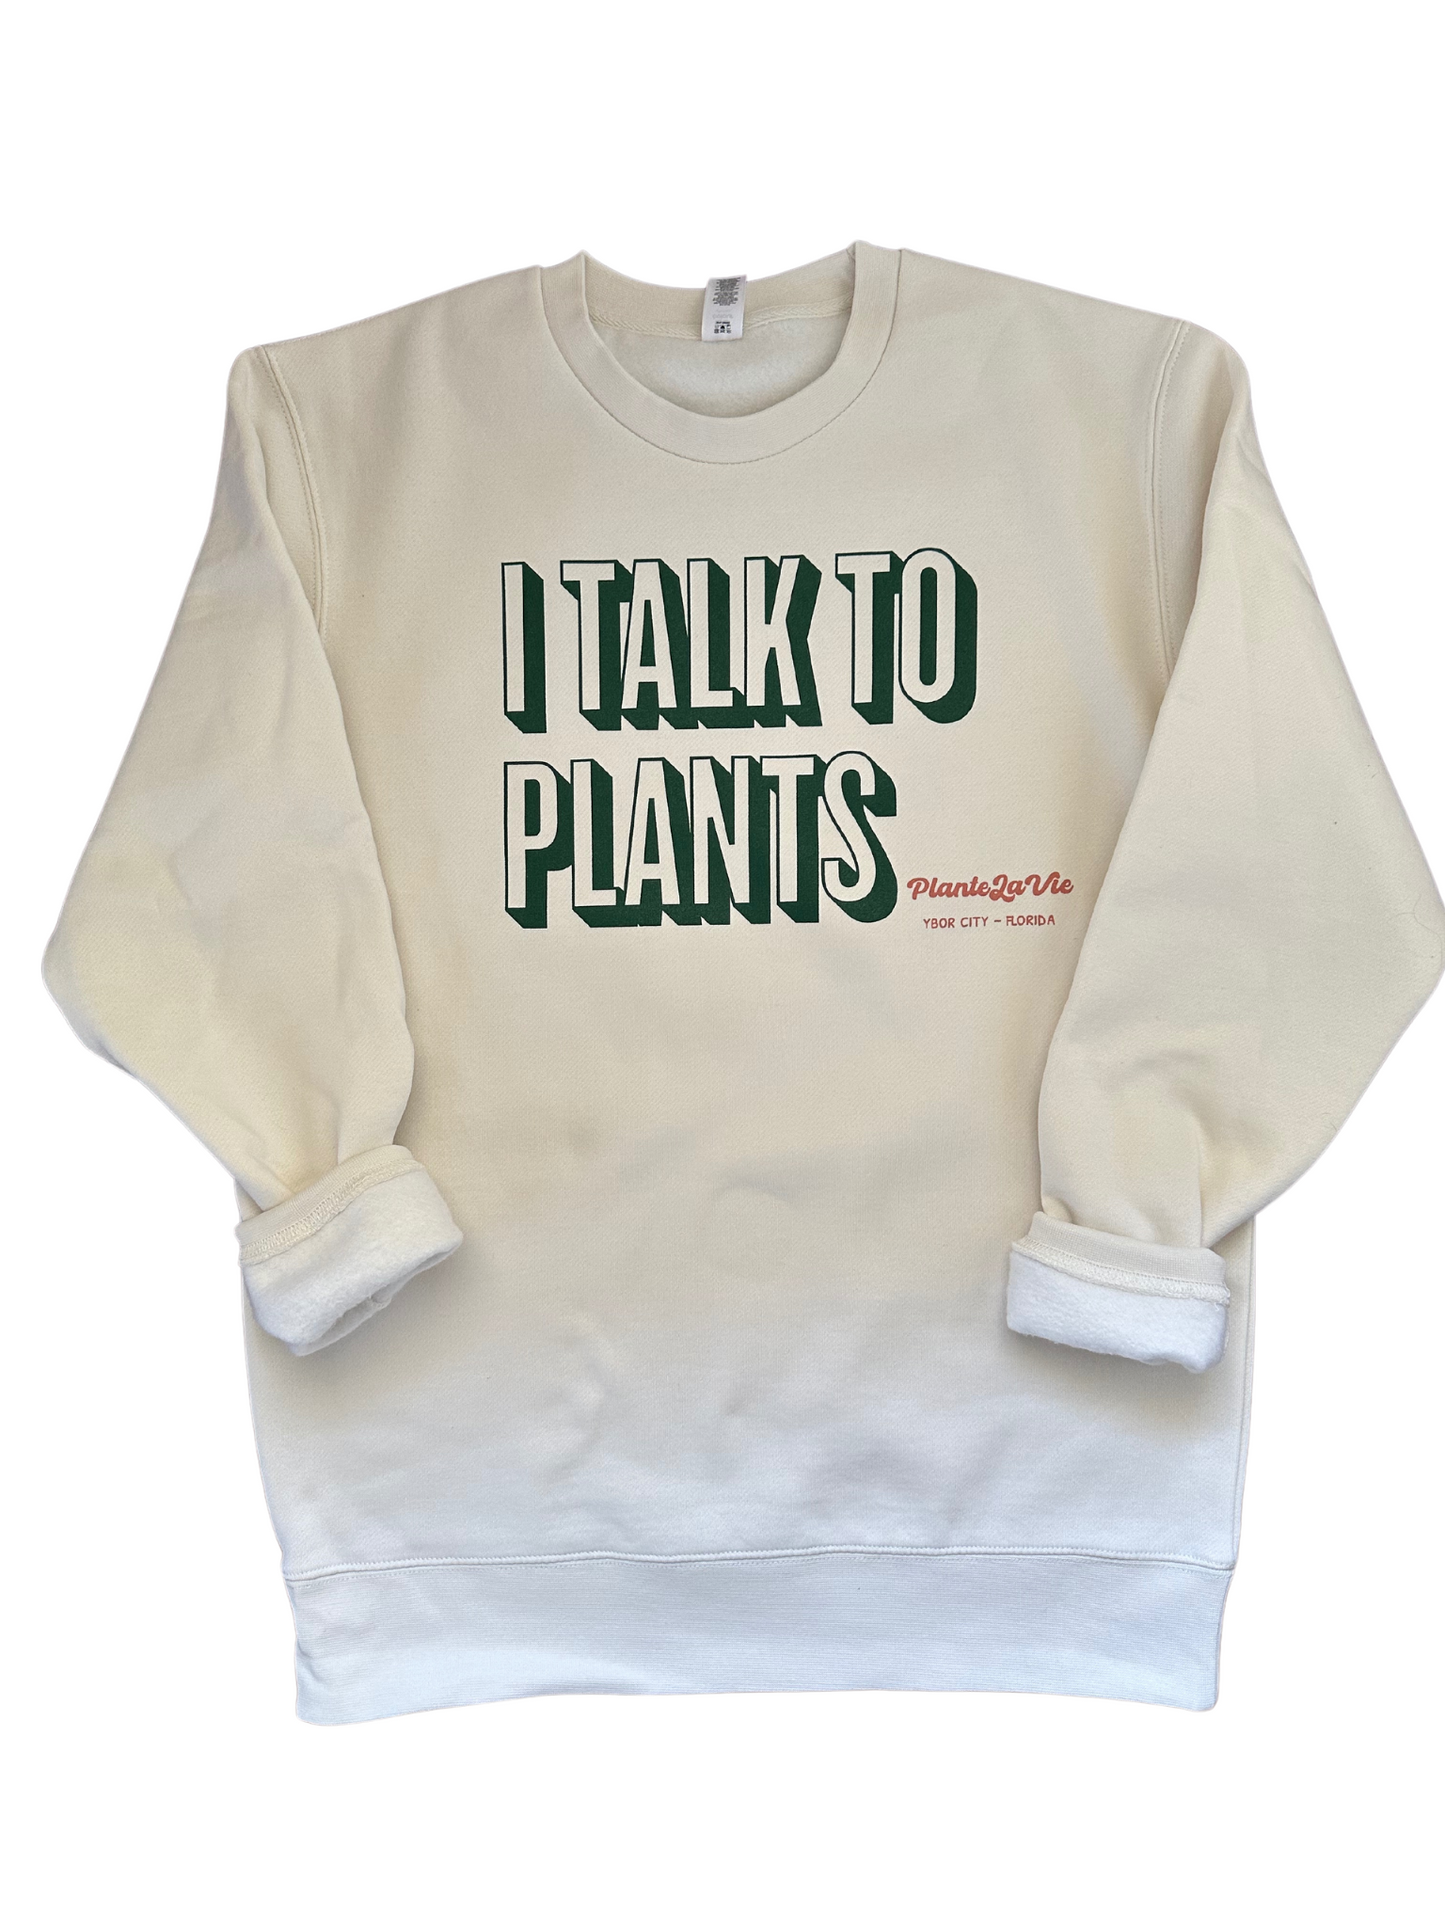 Talk To My Plants Sweatshirt & Short Bundle Set